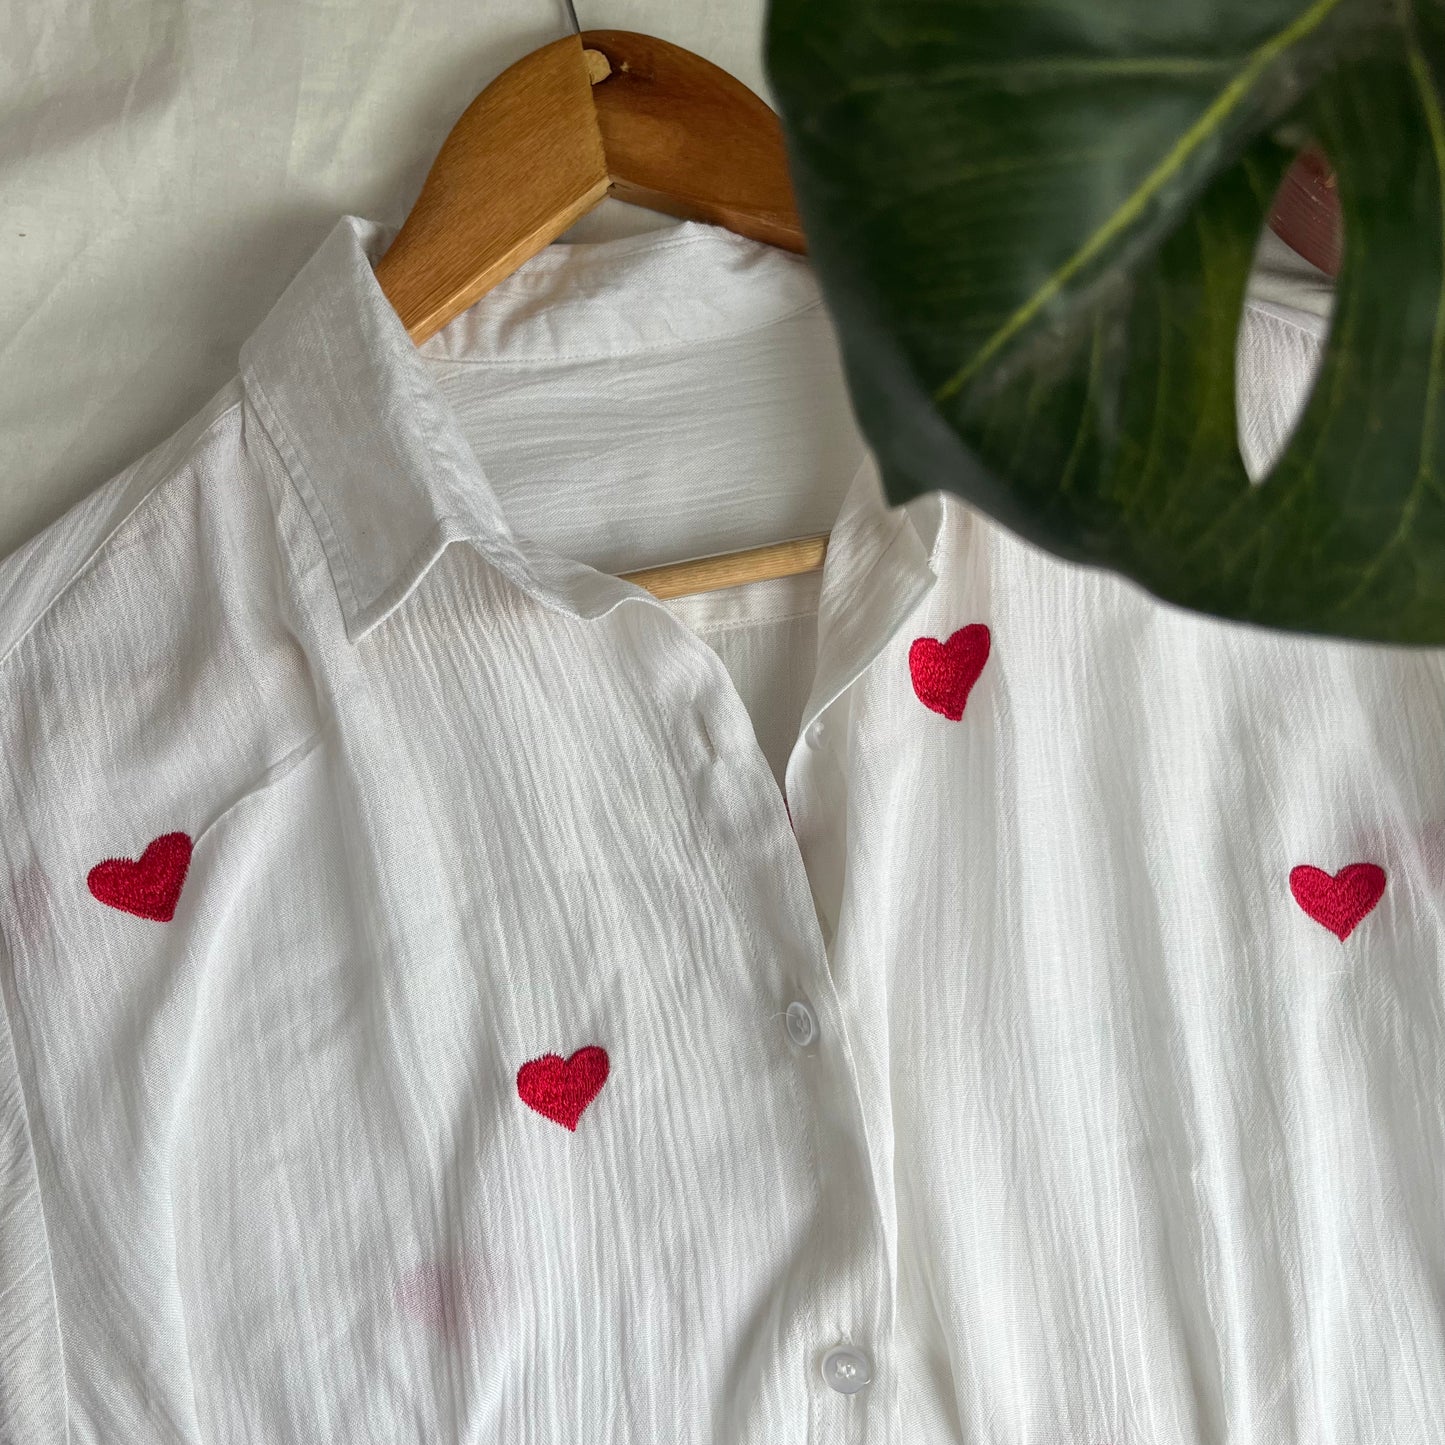 embroidered shirt for women – The Gulaab Saa